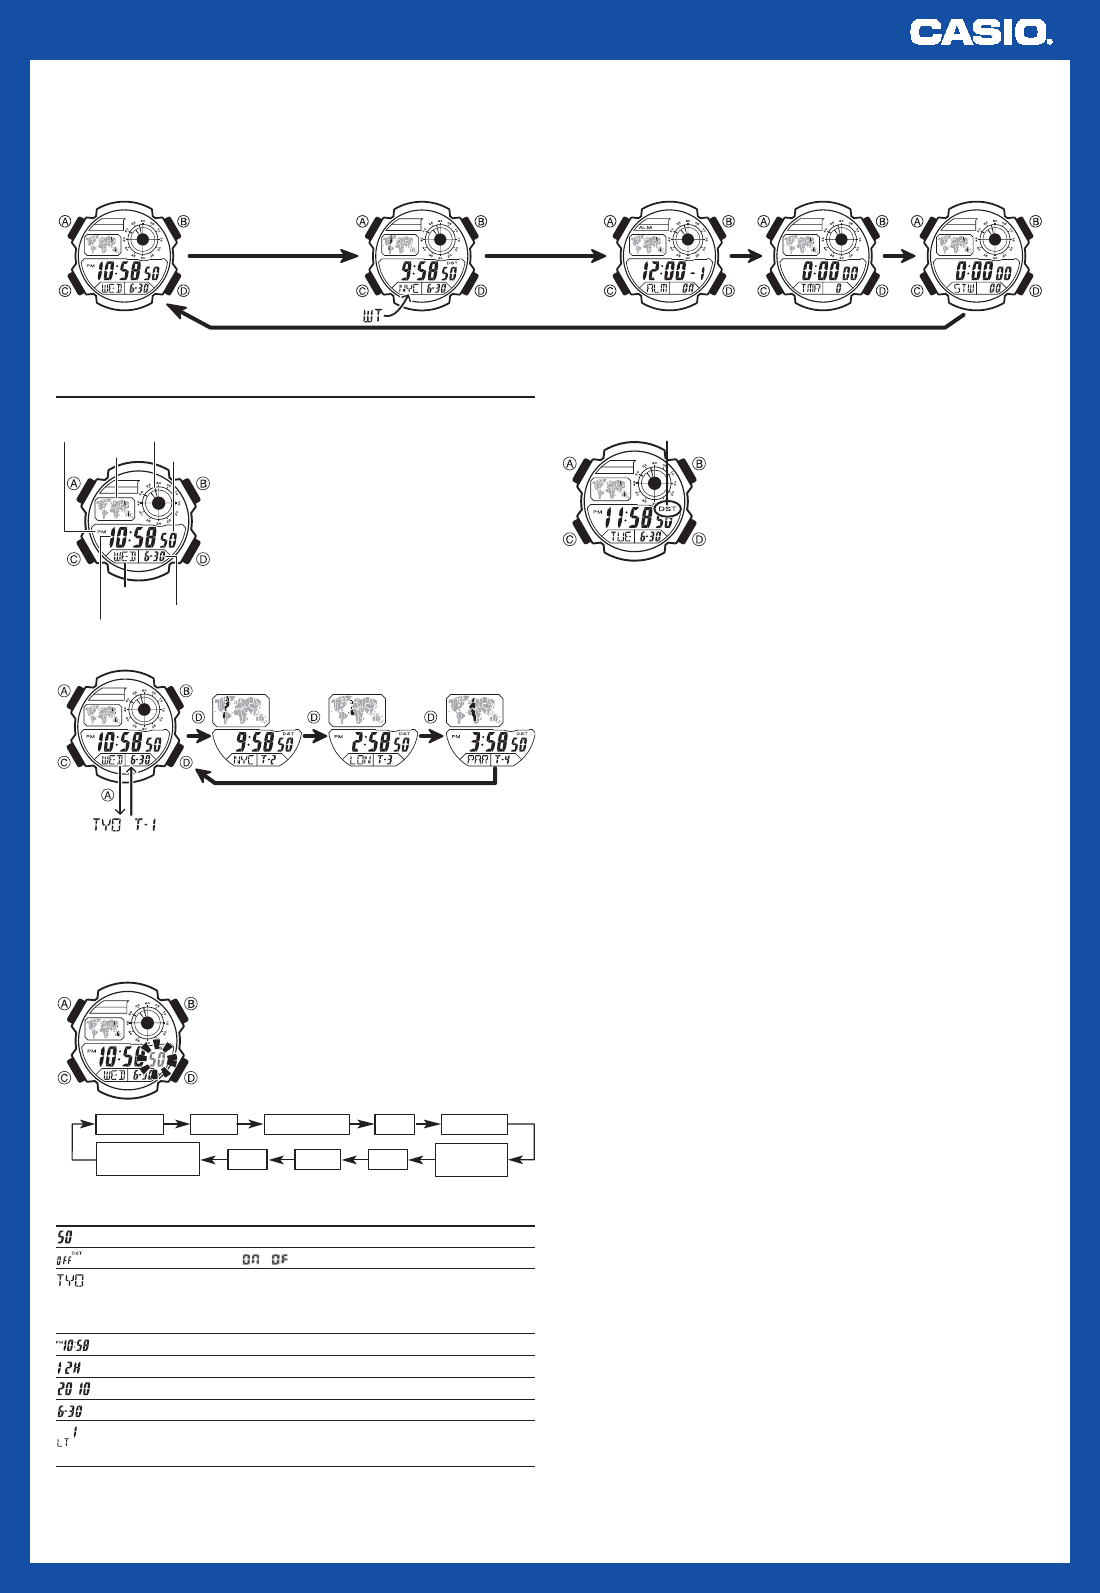 Handleiding Casio 3198 (pagina 1 van 4) (Nederlands)1100 x 1593